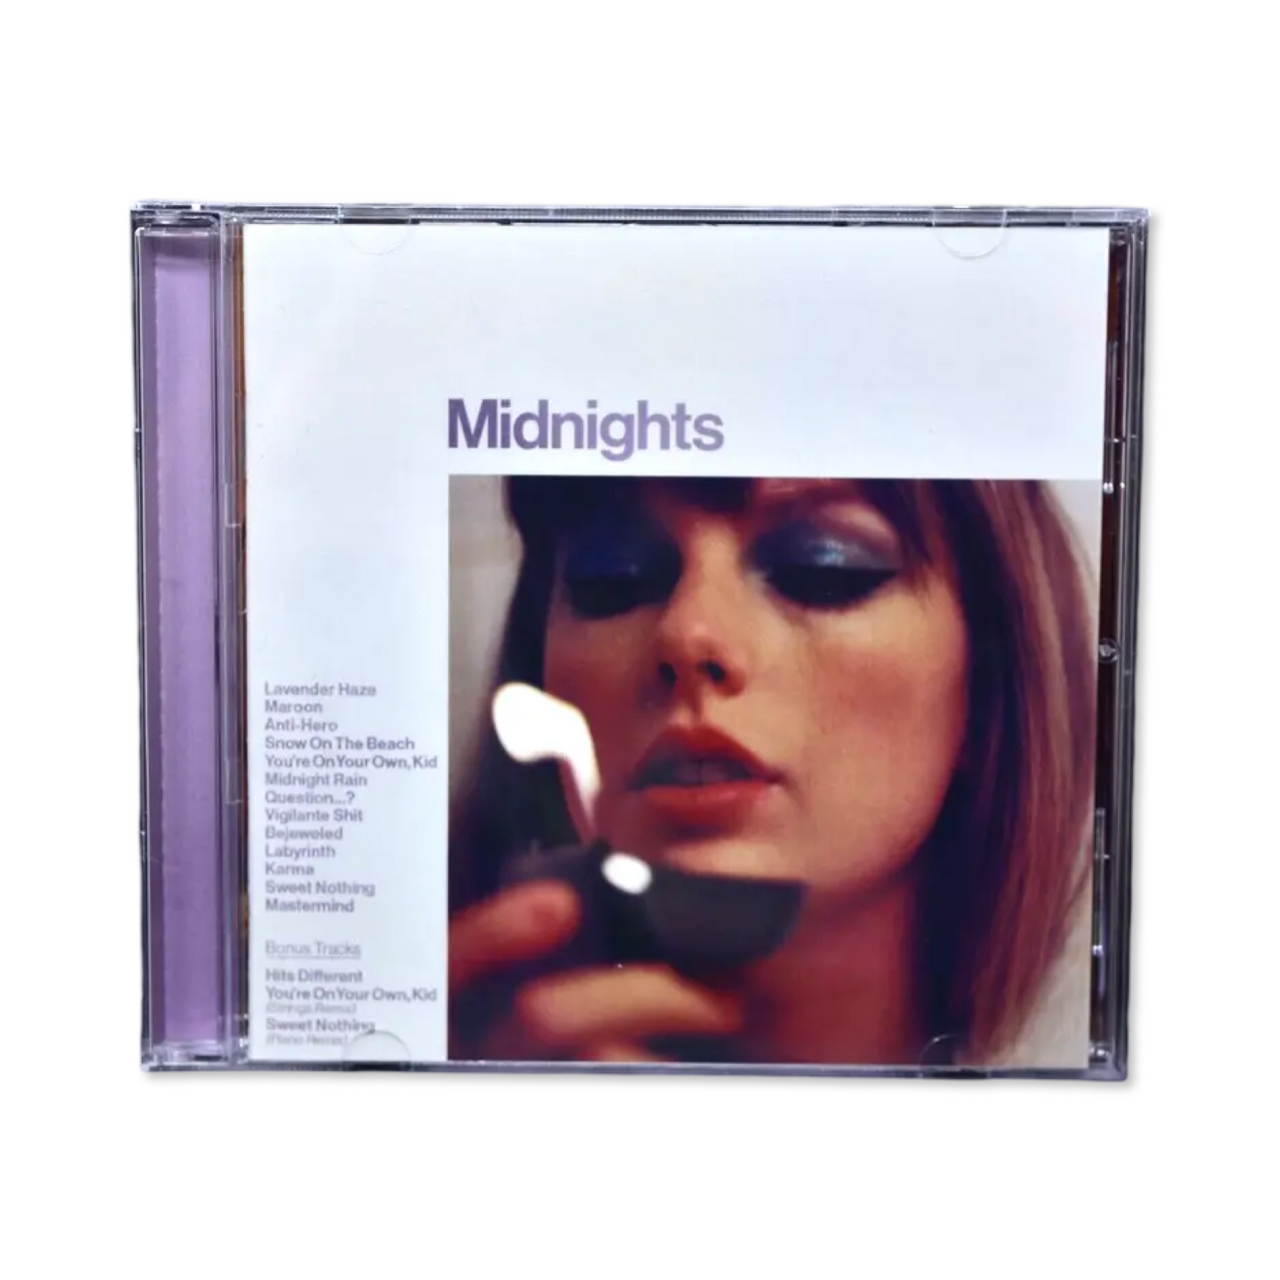 Taylor Swift: Midnights CD (Deluxe Lavender Edition w/ Bonus Tracks)